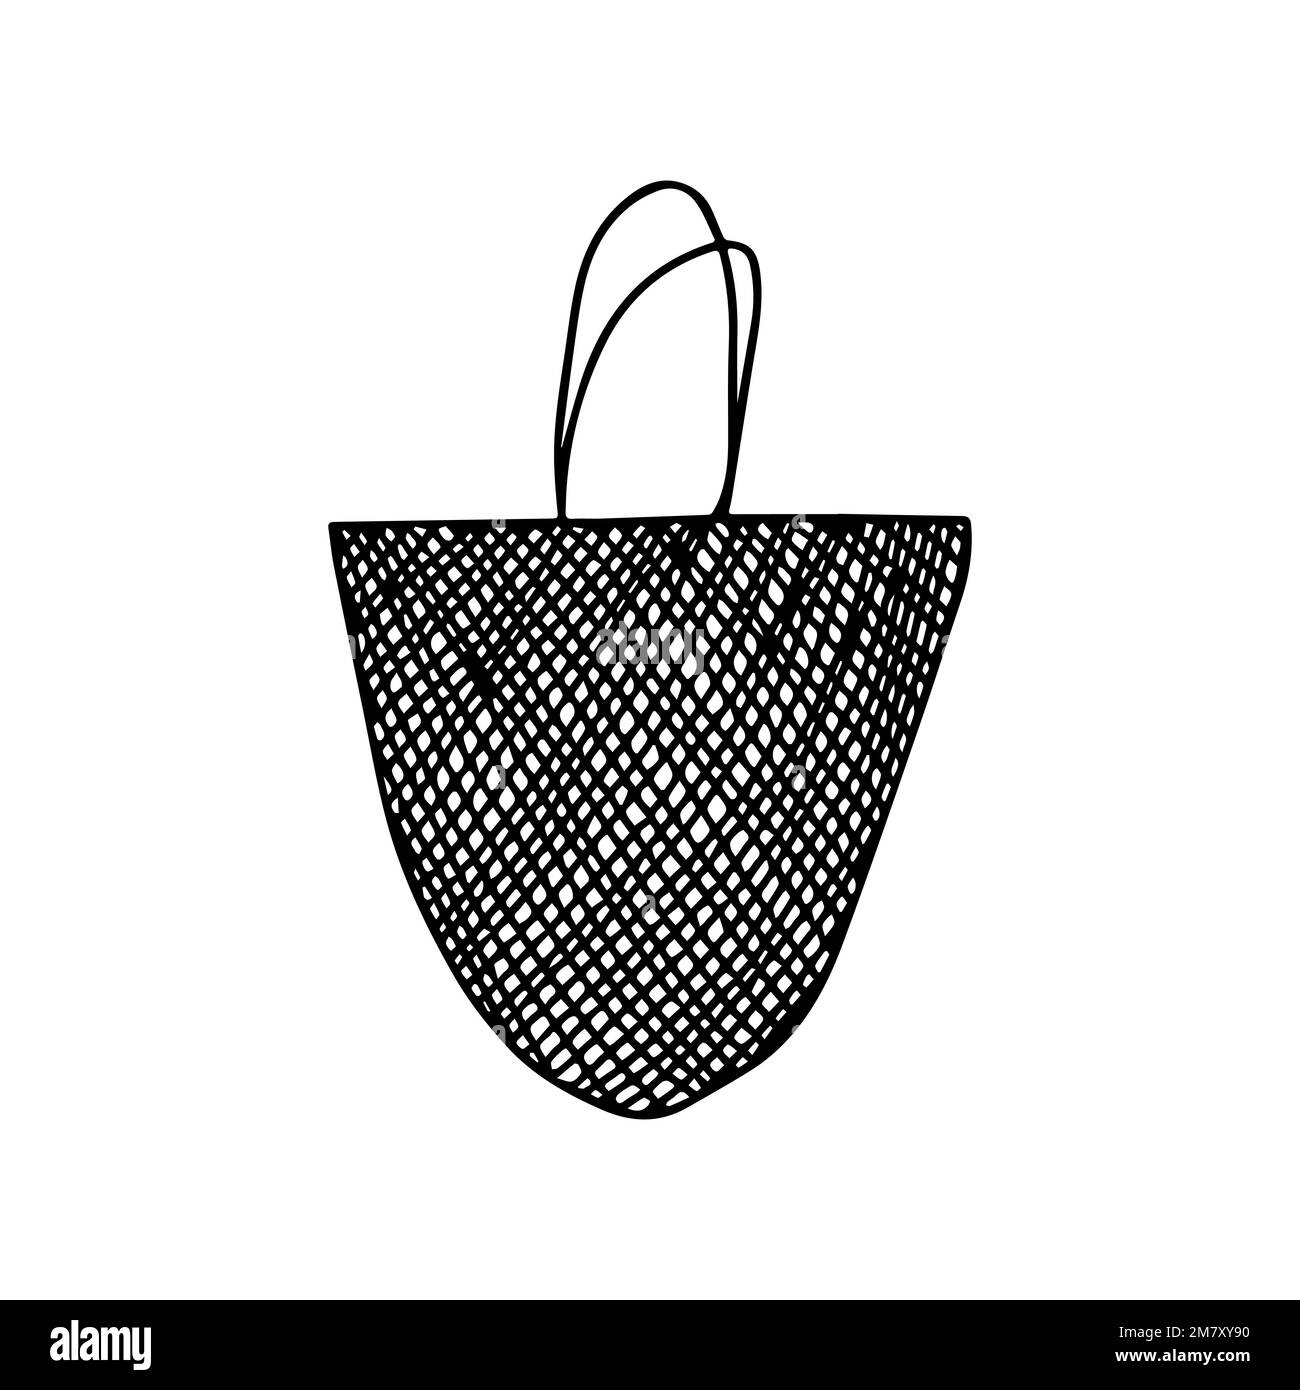 Line Drawing Messenger Bag Illustration, Bag Drawing, Bag Sketch, Line Drawing  Bag PNG Transparent Clipart Image and PSD File for Free Download